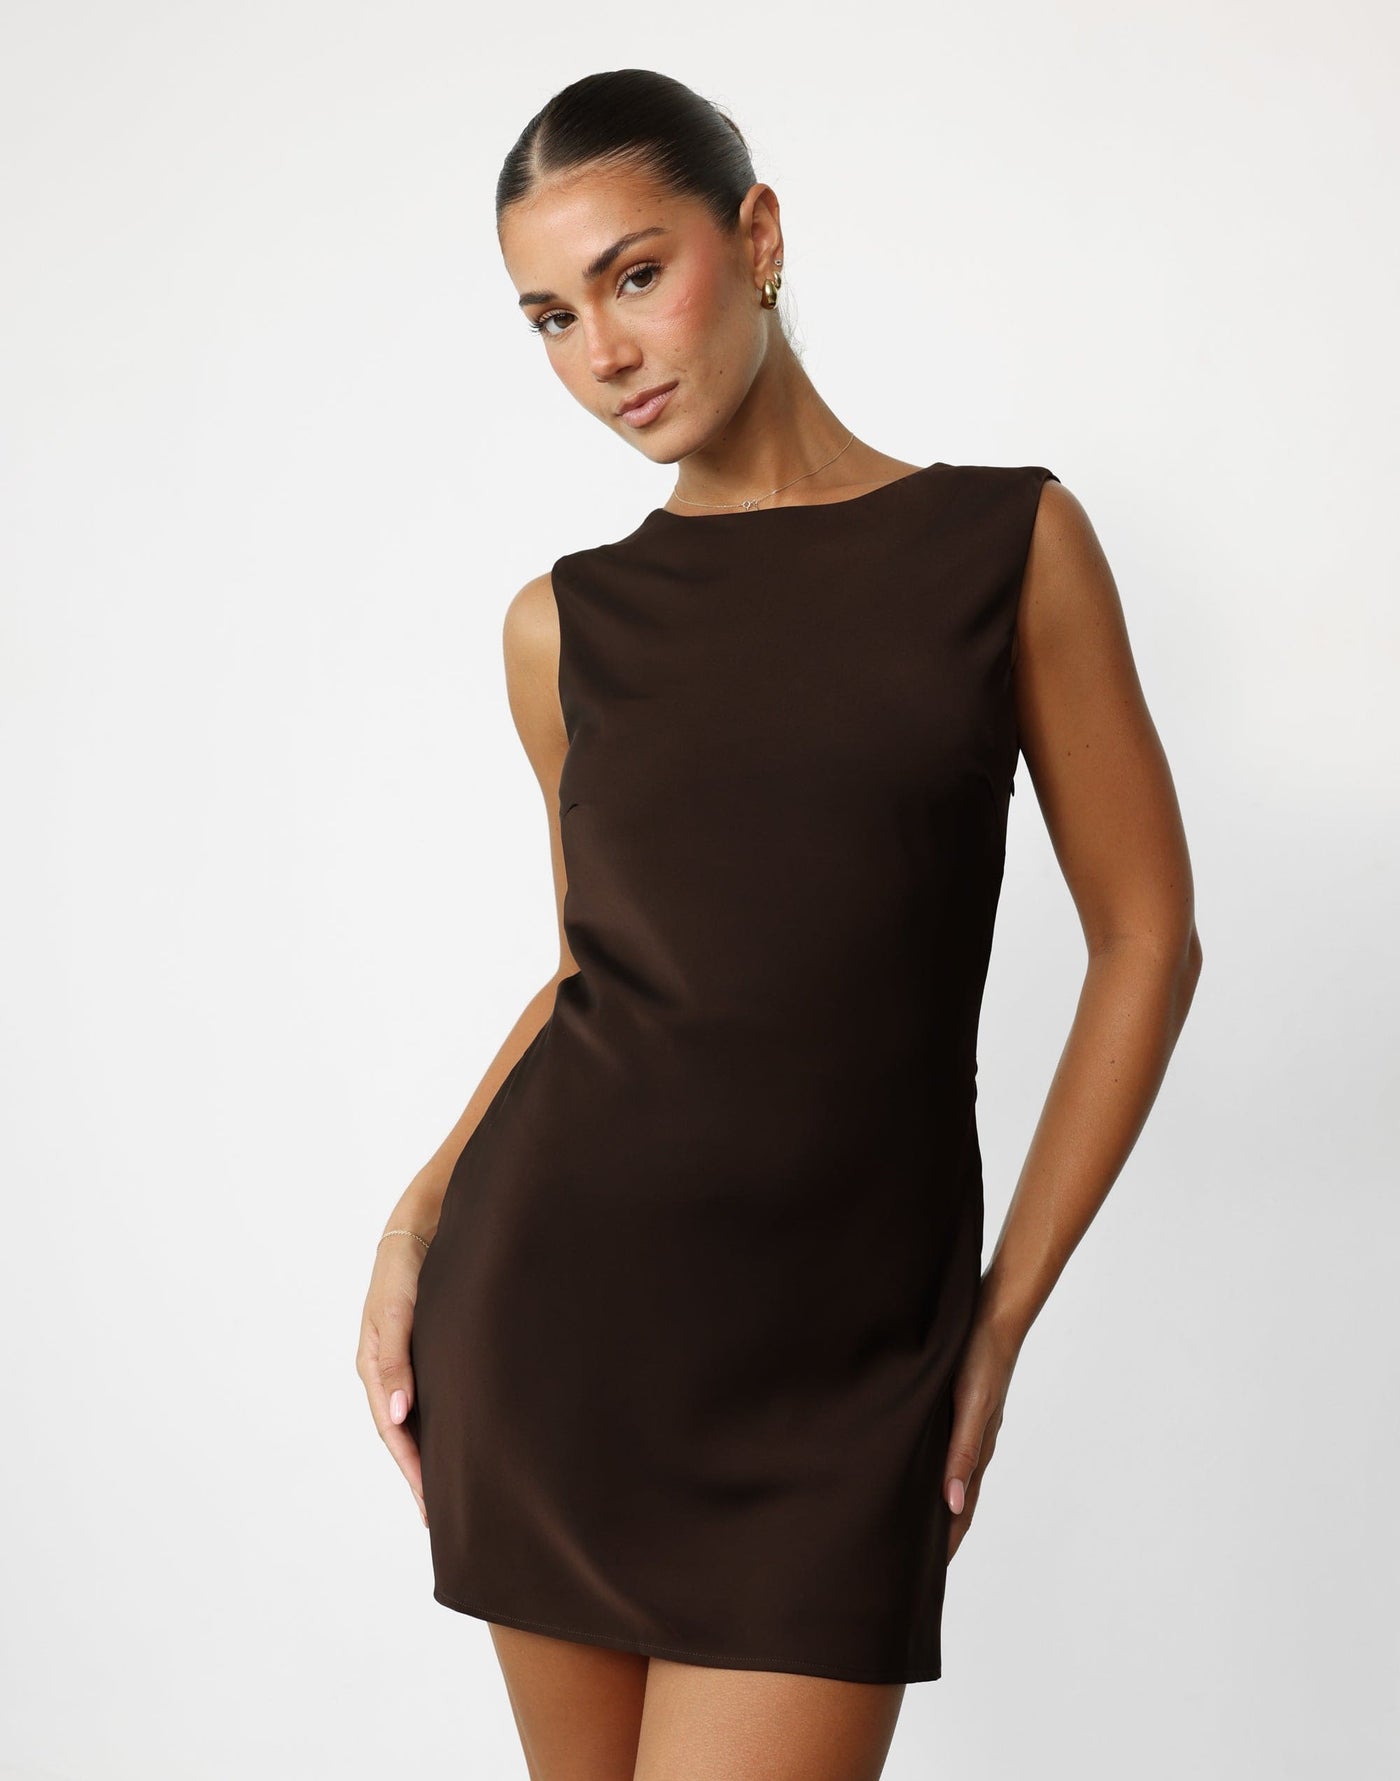 Lucetto Mini Dress (Chocolate) | CHARCOAL Exclusive - Sheer Back Satin Mini Dress - Women's Dress - Charcoal Clothing